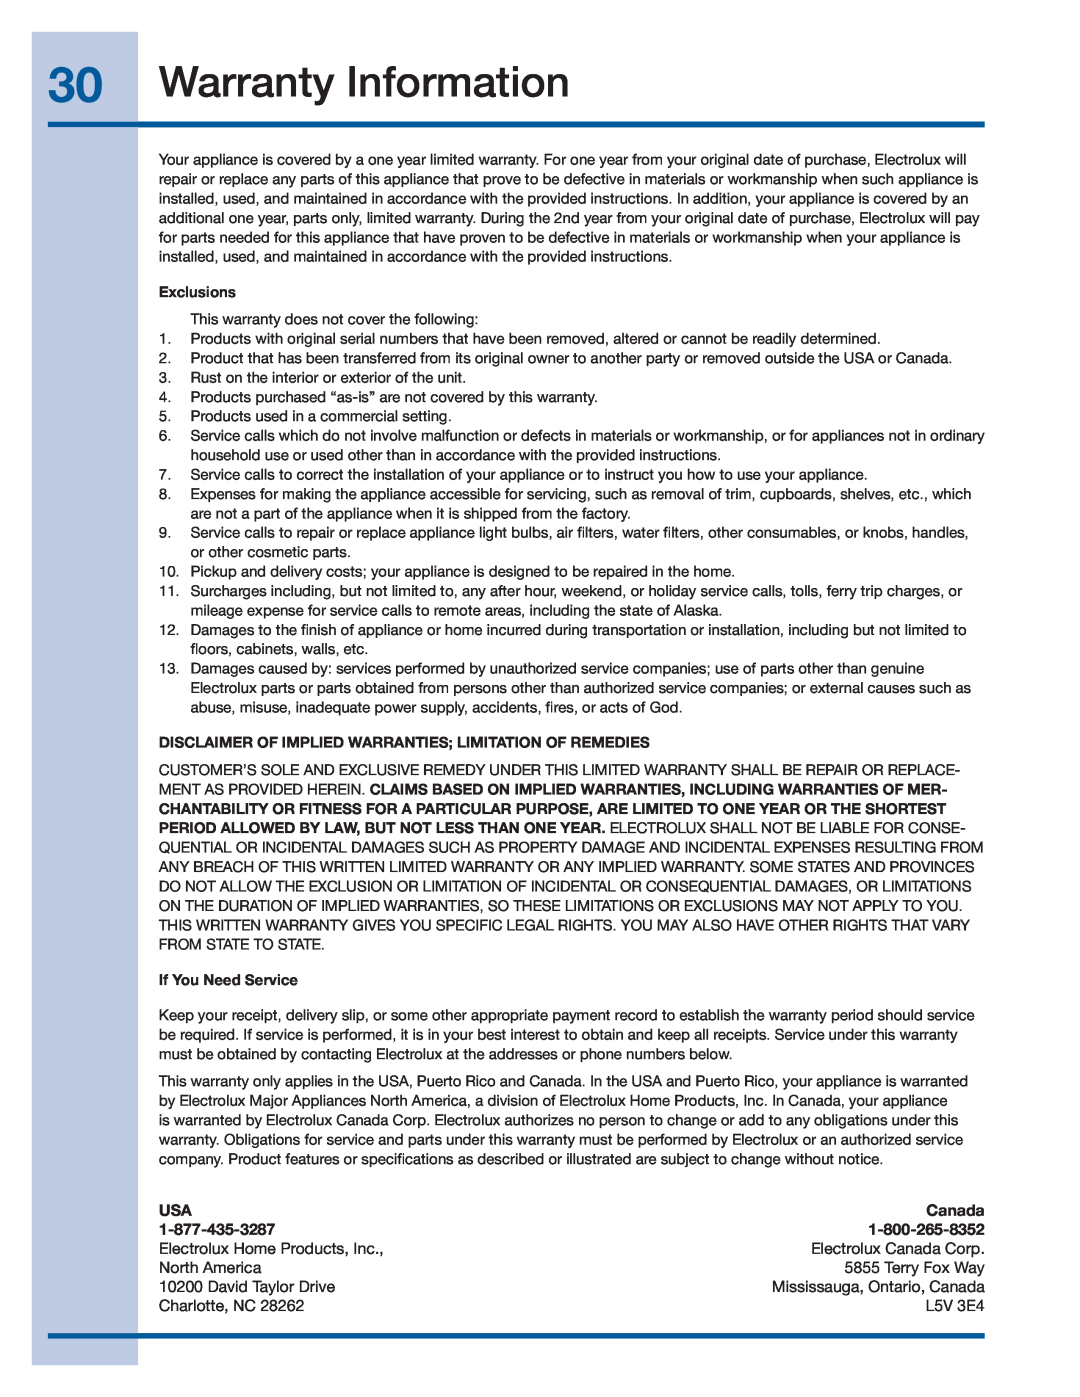 Electrolux EIFLS60LT Warranty Information, Canada, Exclusions, Disclaimer Of Implied Warranties Limitation Of Remedies 